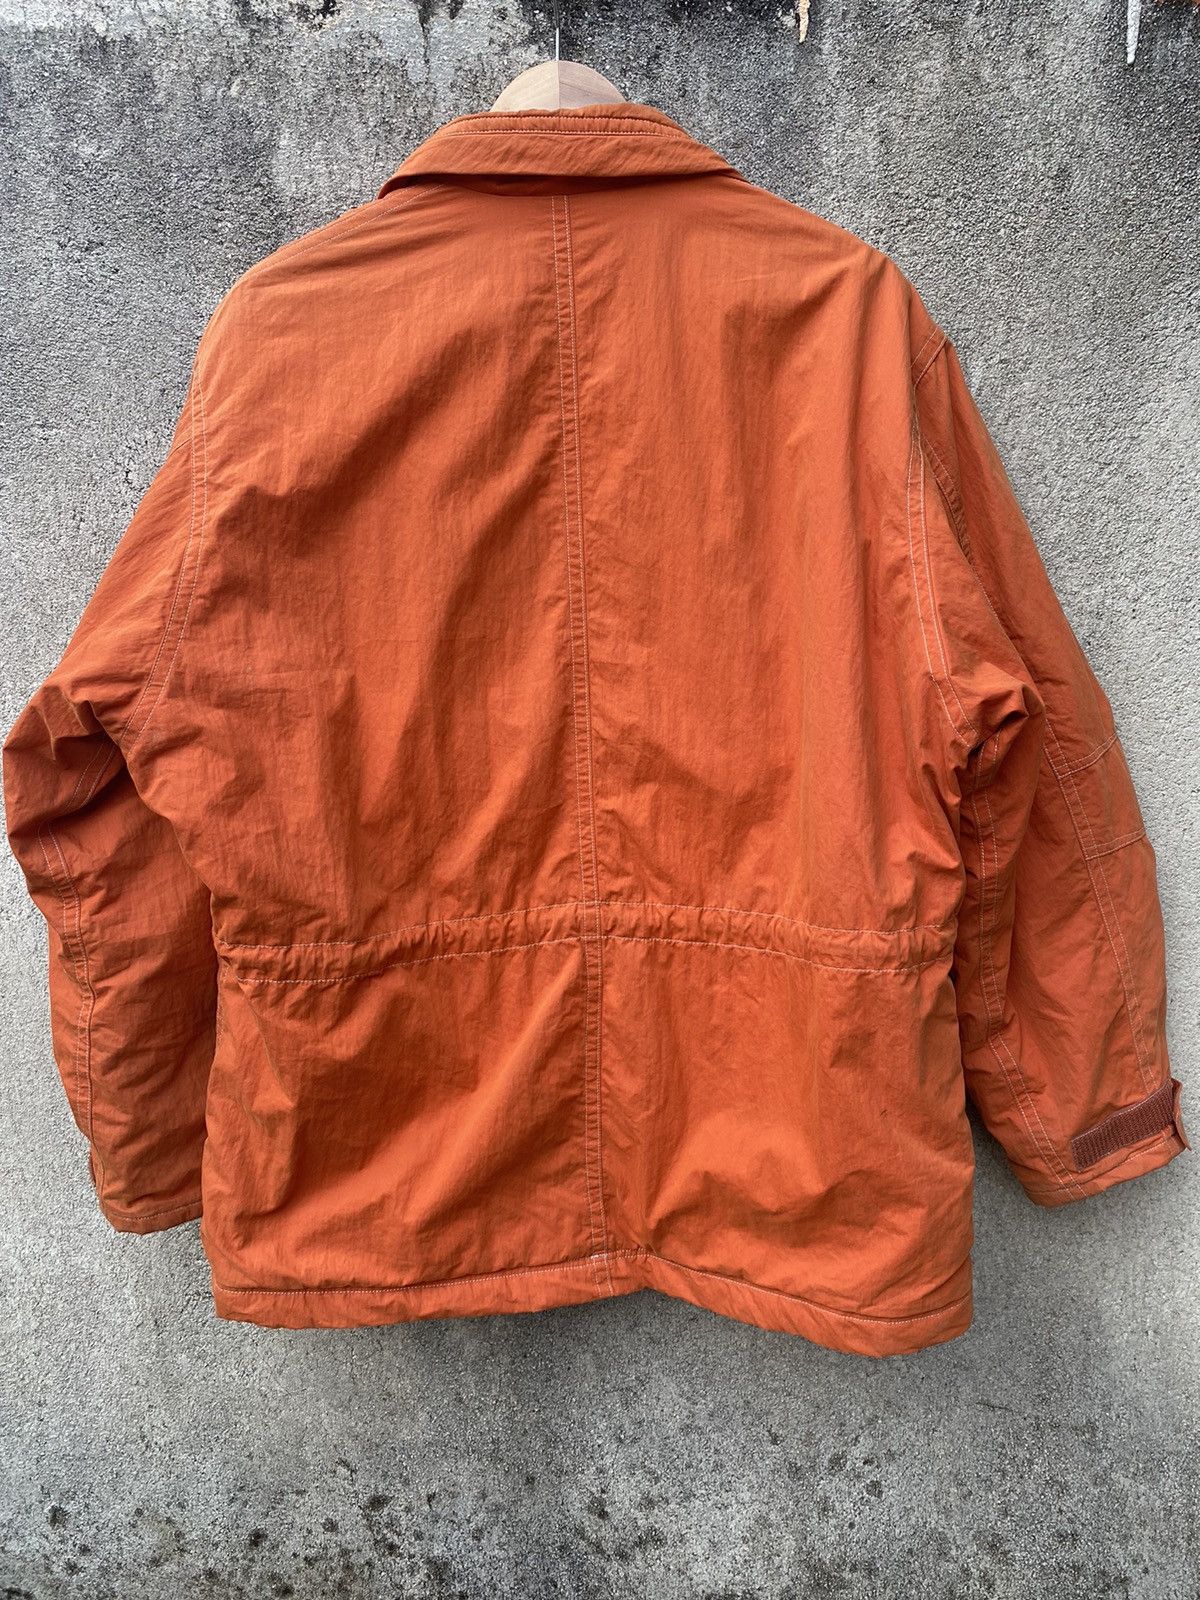 Issey Miyake - Vintage Hai Sporting Gear Parka Jacket Orange Colour - 2